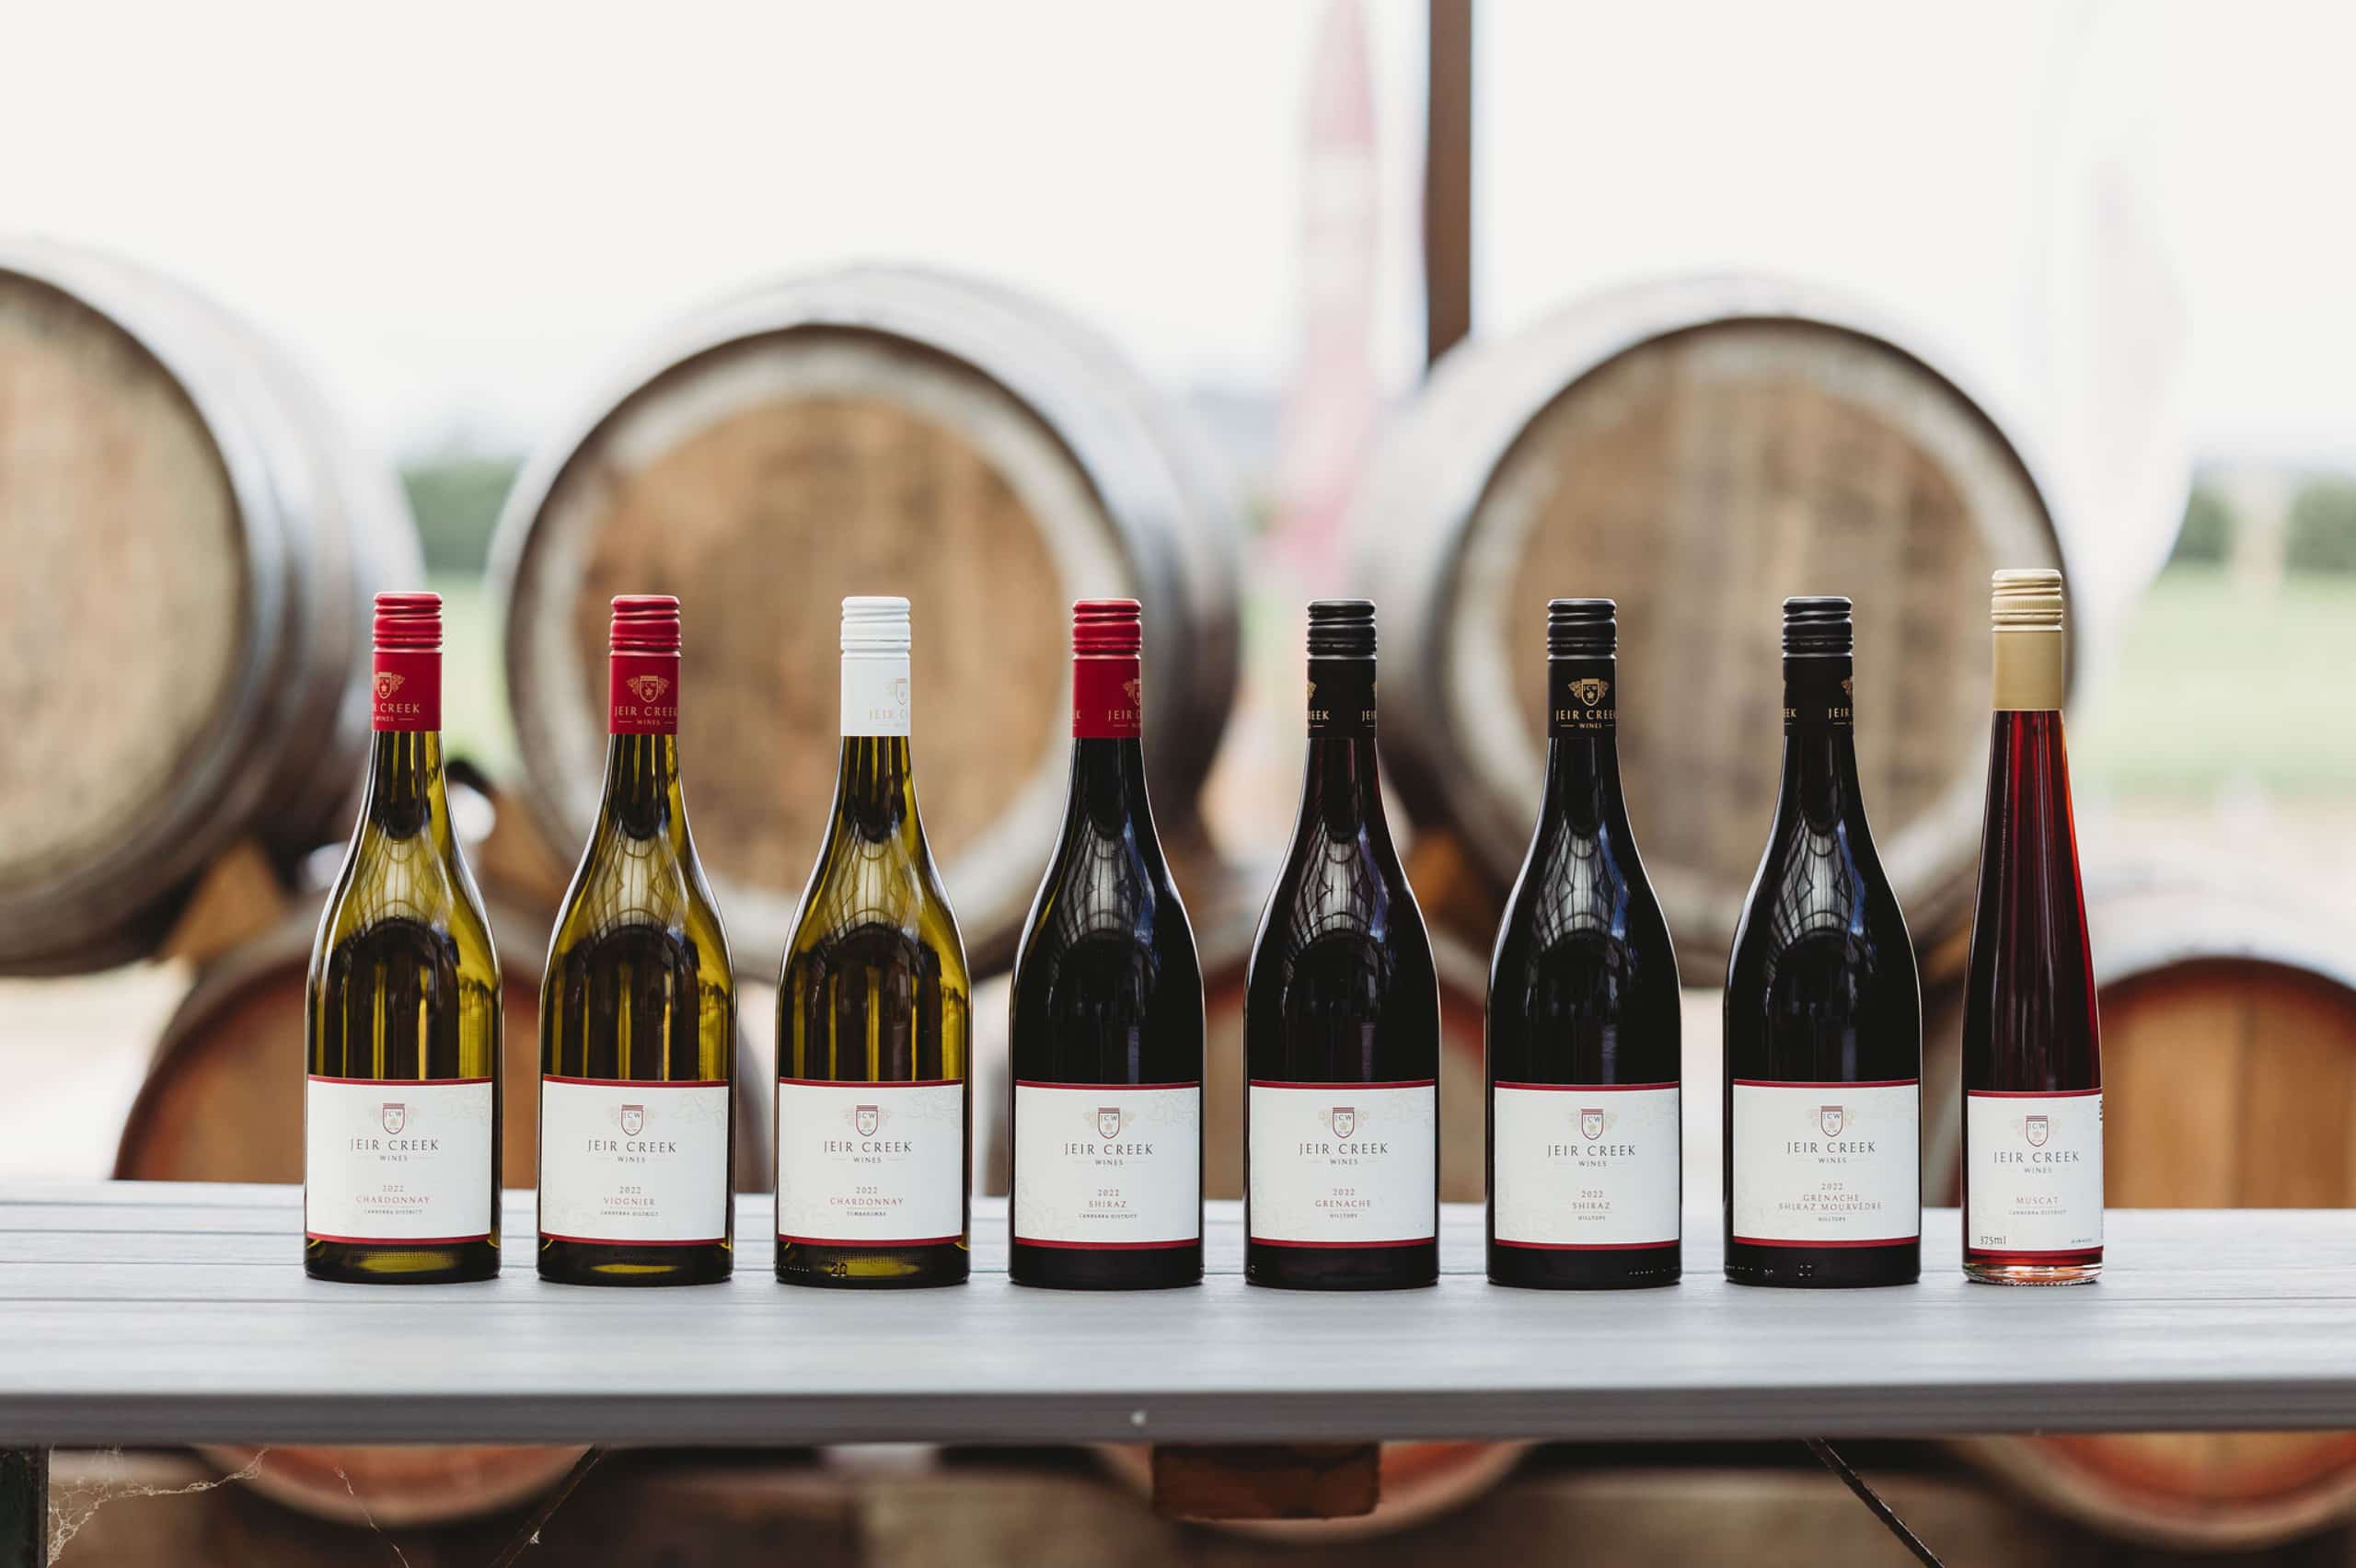 Eight bottles of Jeir Creek Wine sitting side by side on a table in front of wine barrels